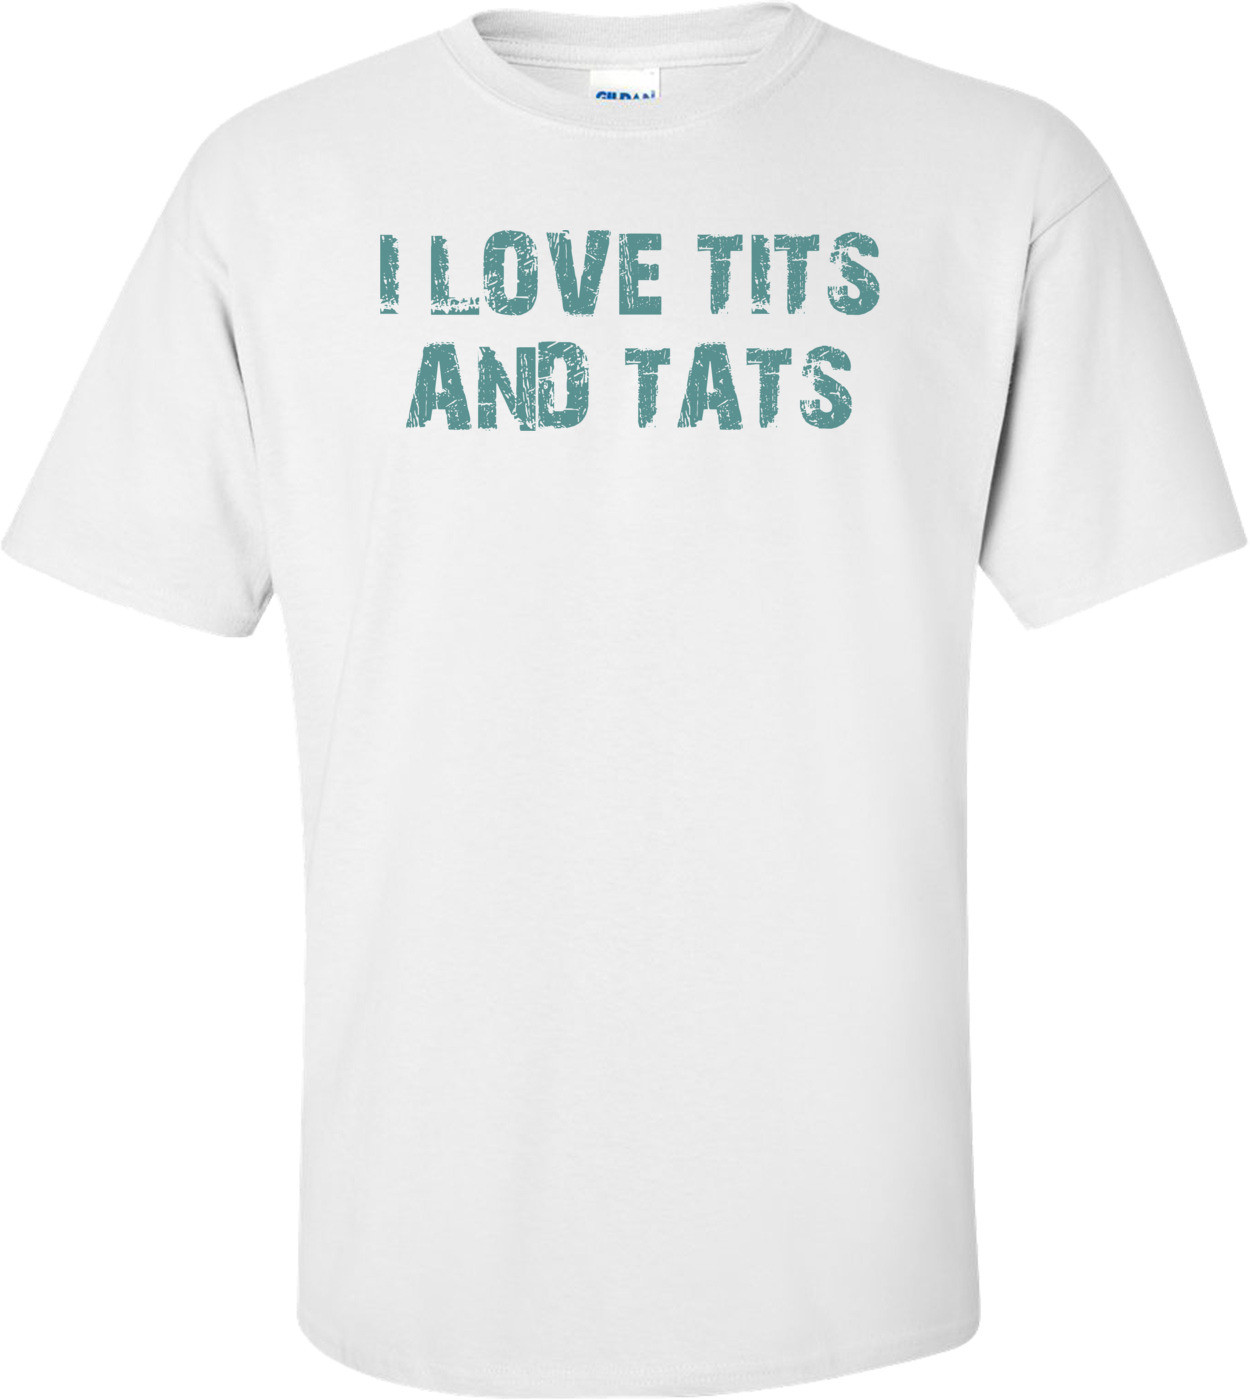 I LOVE TITS AND TATS